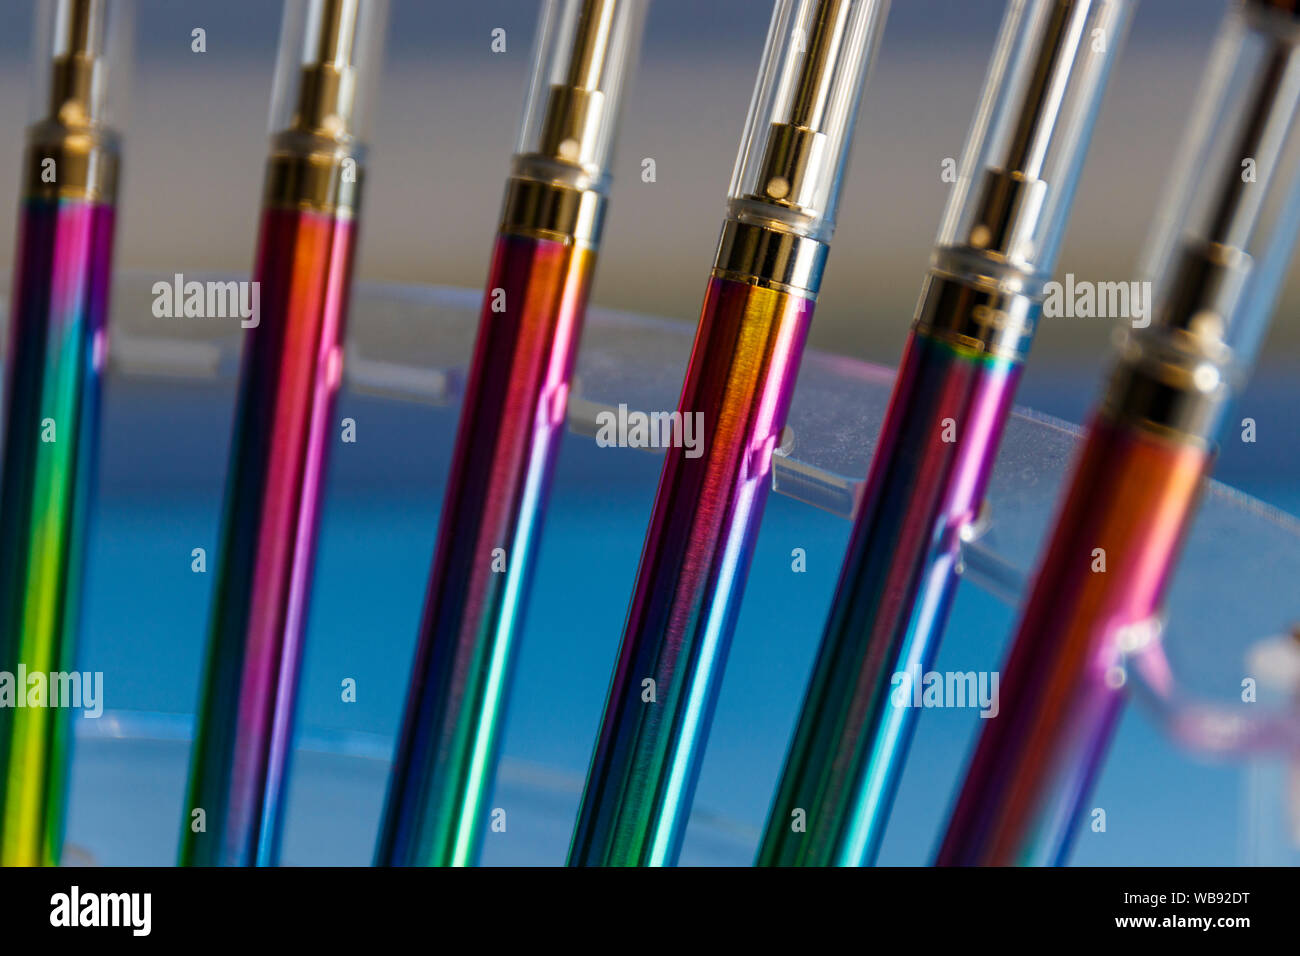 Vape or vaporizer pens. Vape pens come with refillable cartridges that can be filled with THC oil, cannabis oil, hash oil, CBD oil, or vape juice. Vap Stock Photo